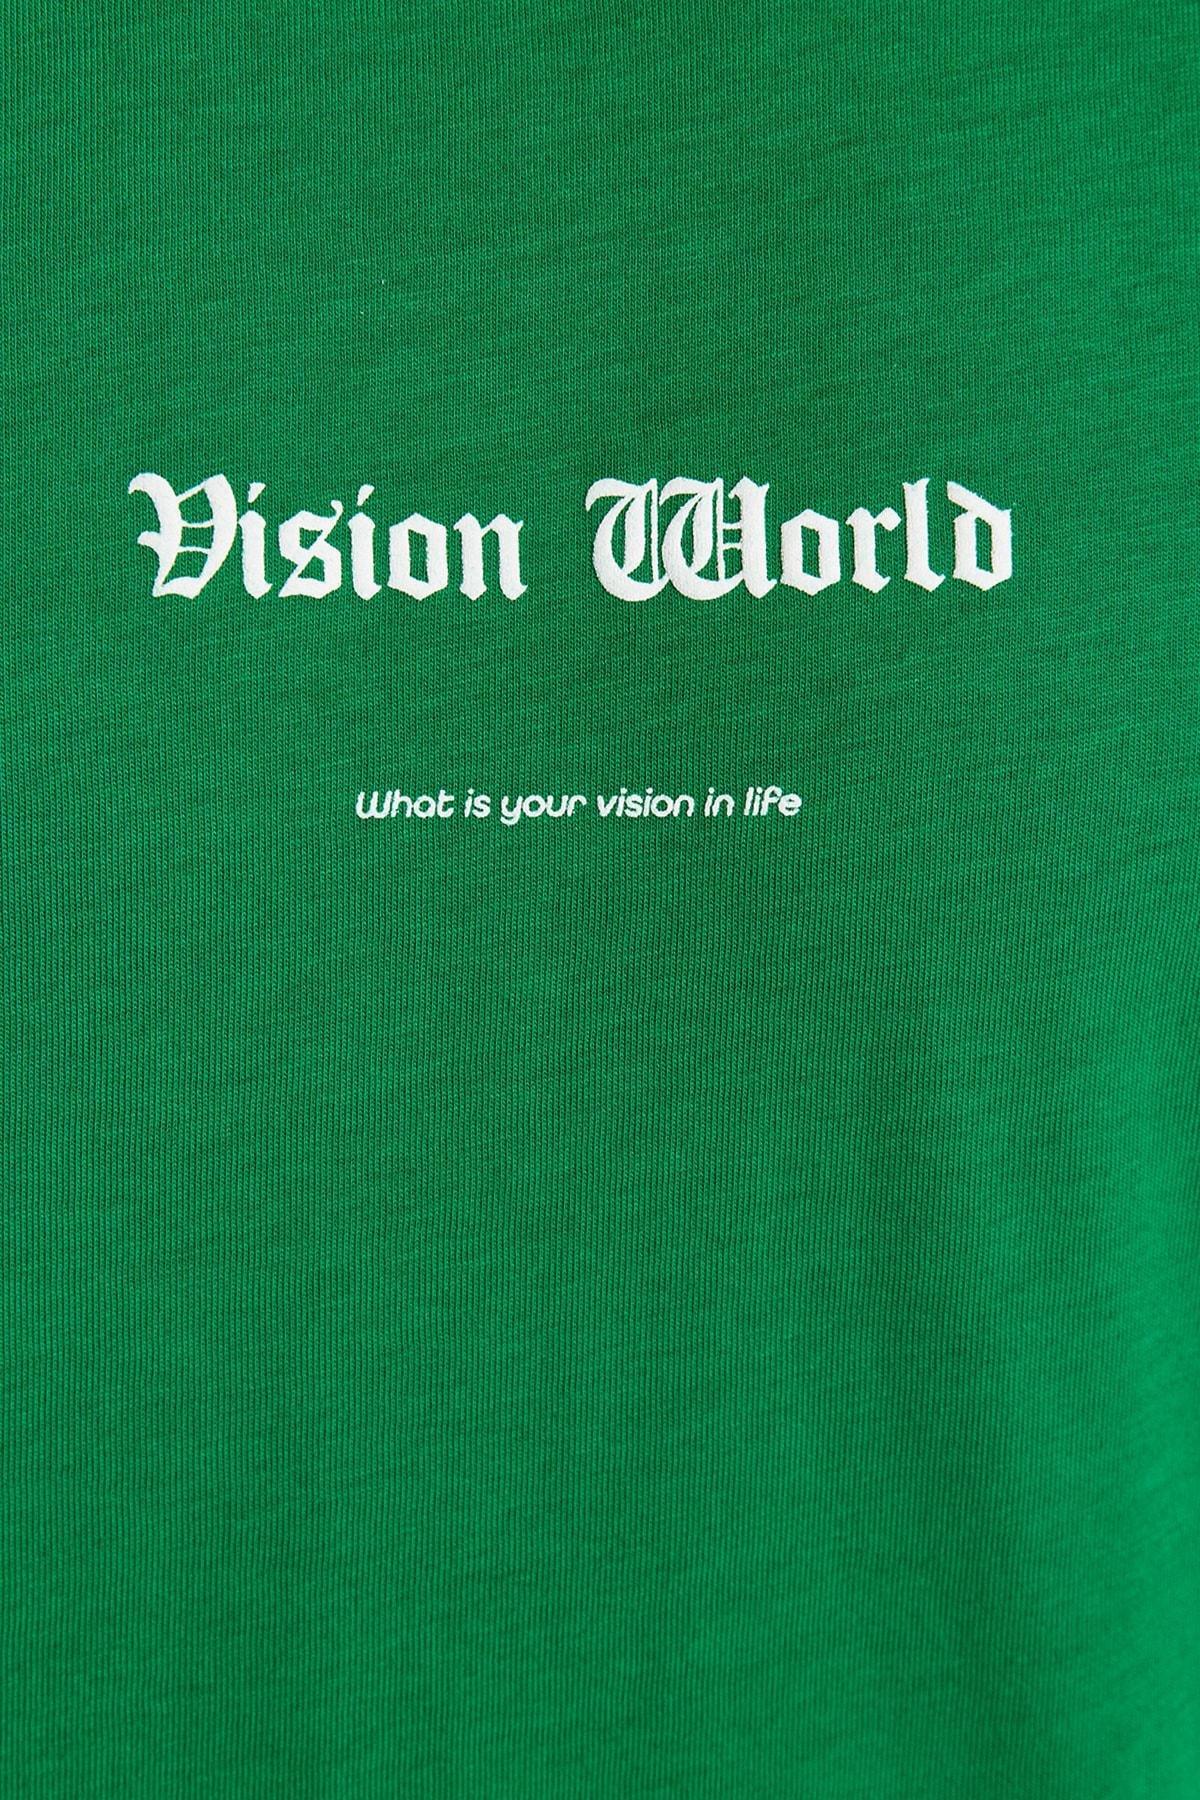 Trendyol - Green Printed Oversize T-Shirt